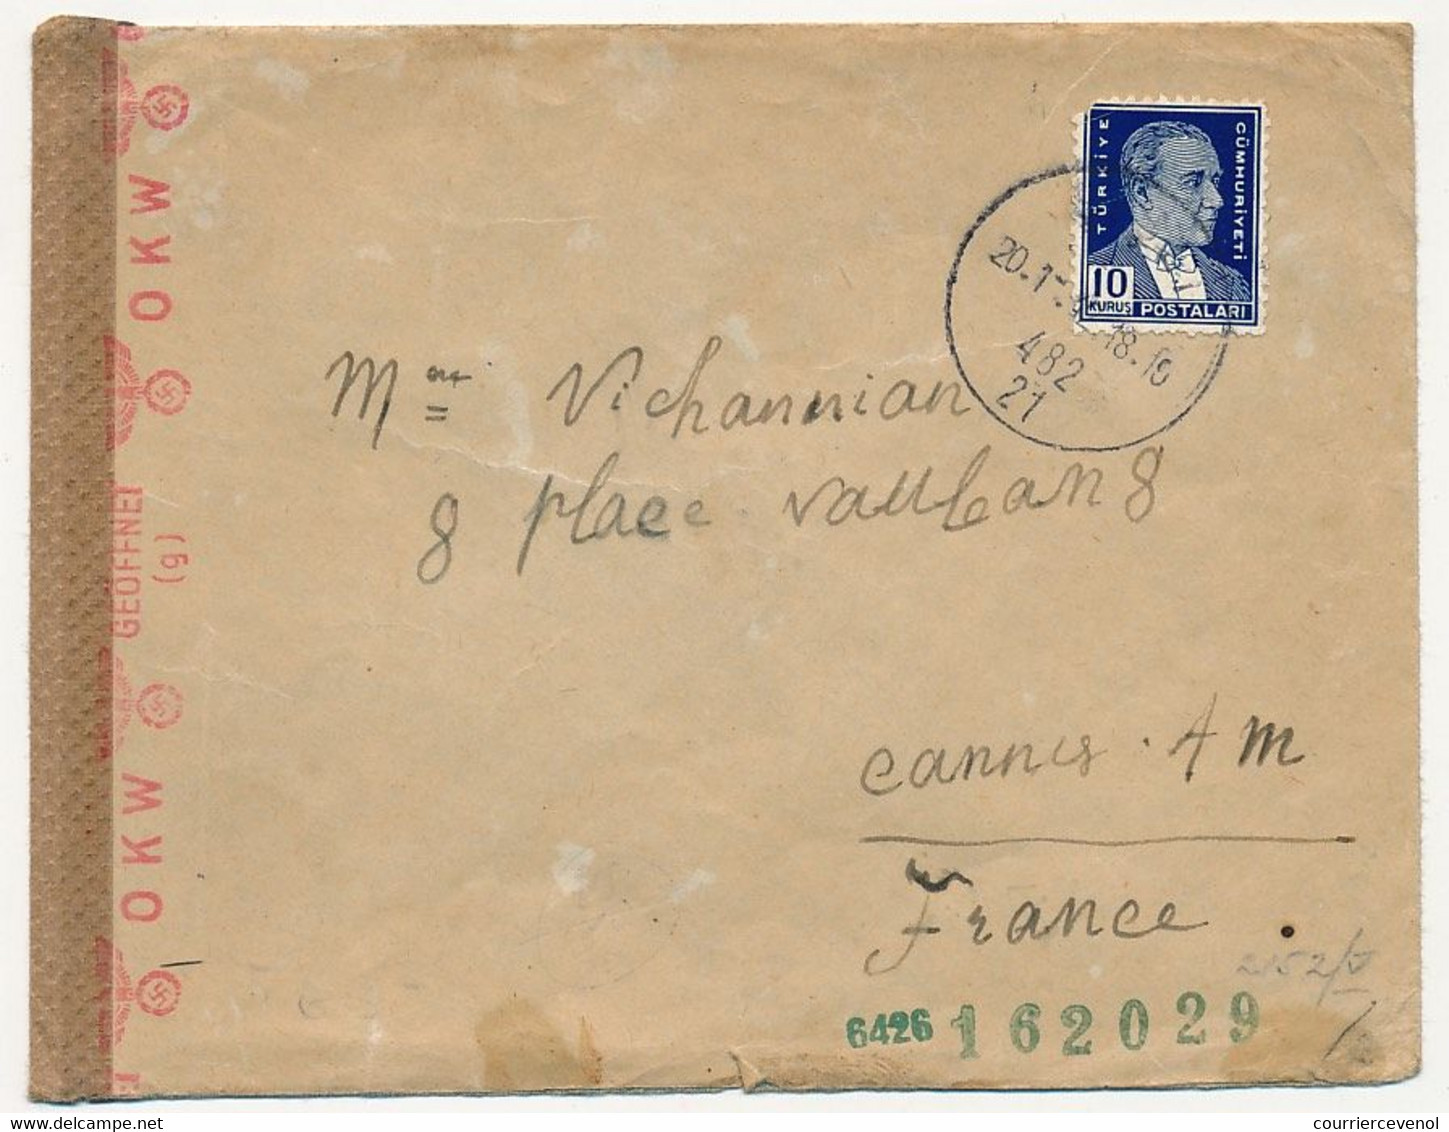 TURQUIE - Enveloppe Pour Cannes (France) 1942 Censure OKW Commission G - Briefe U. Dokumente